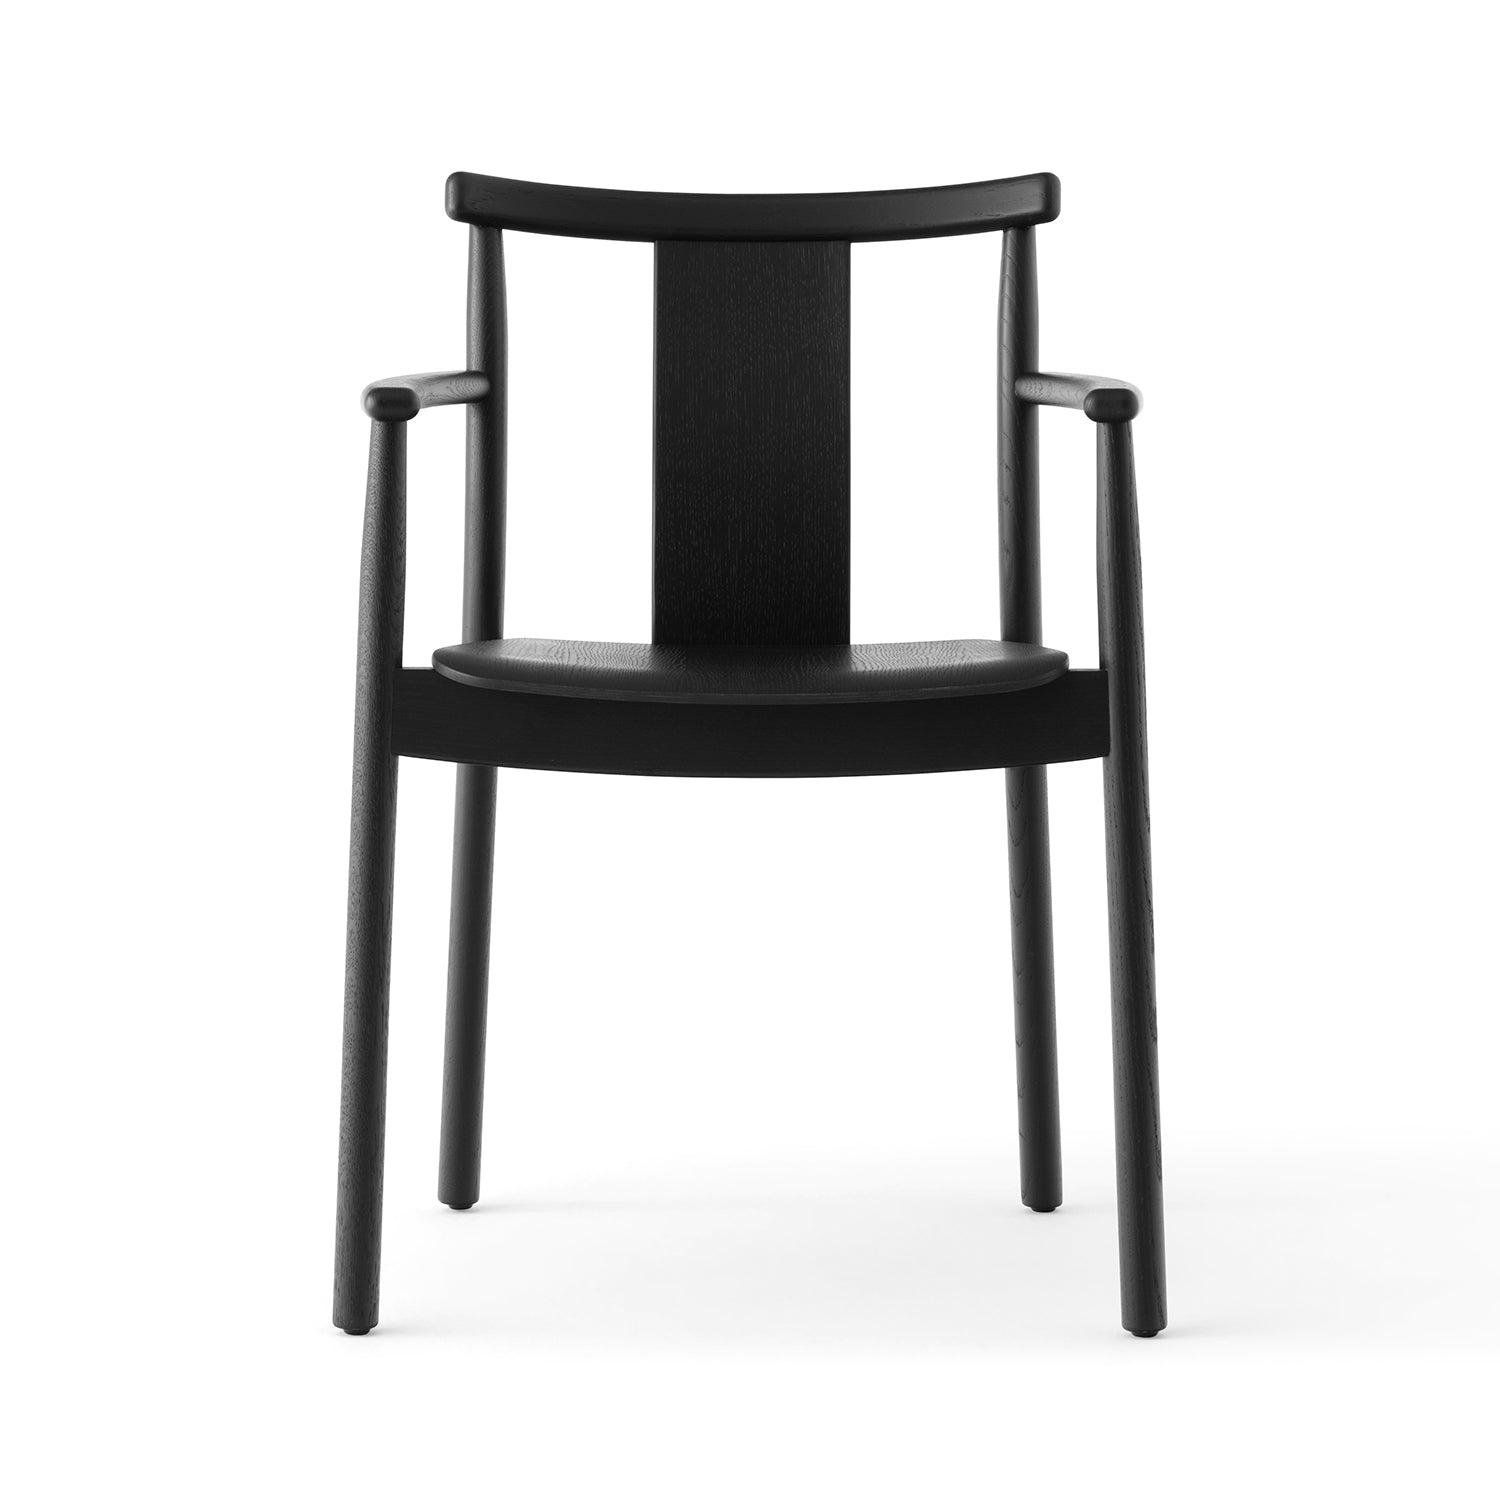 Merkur Dining Chair w/ Armrests - The Design Choice